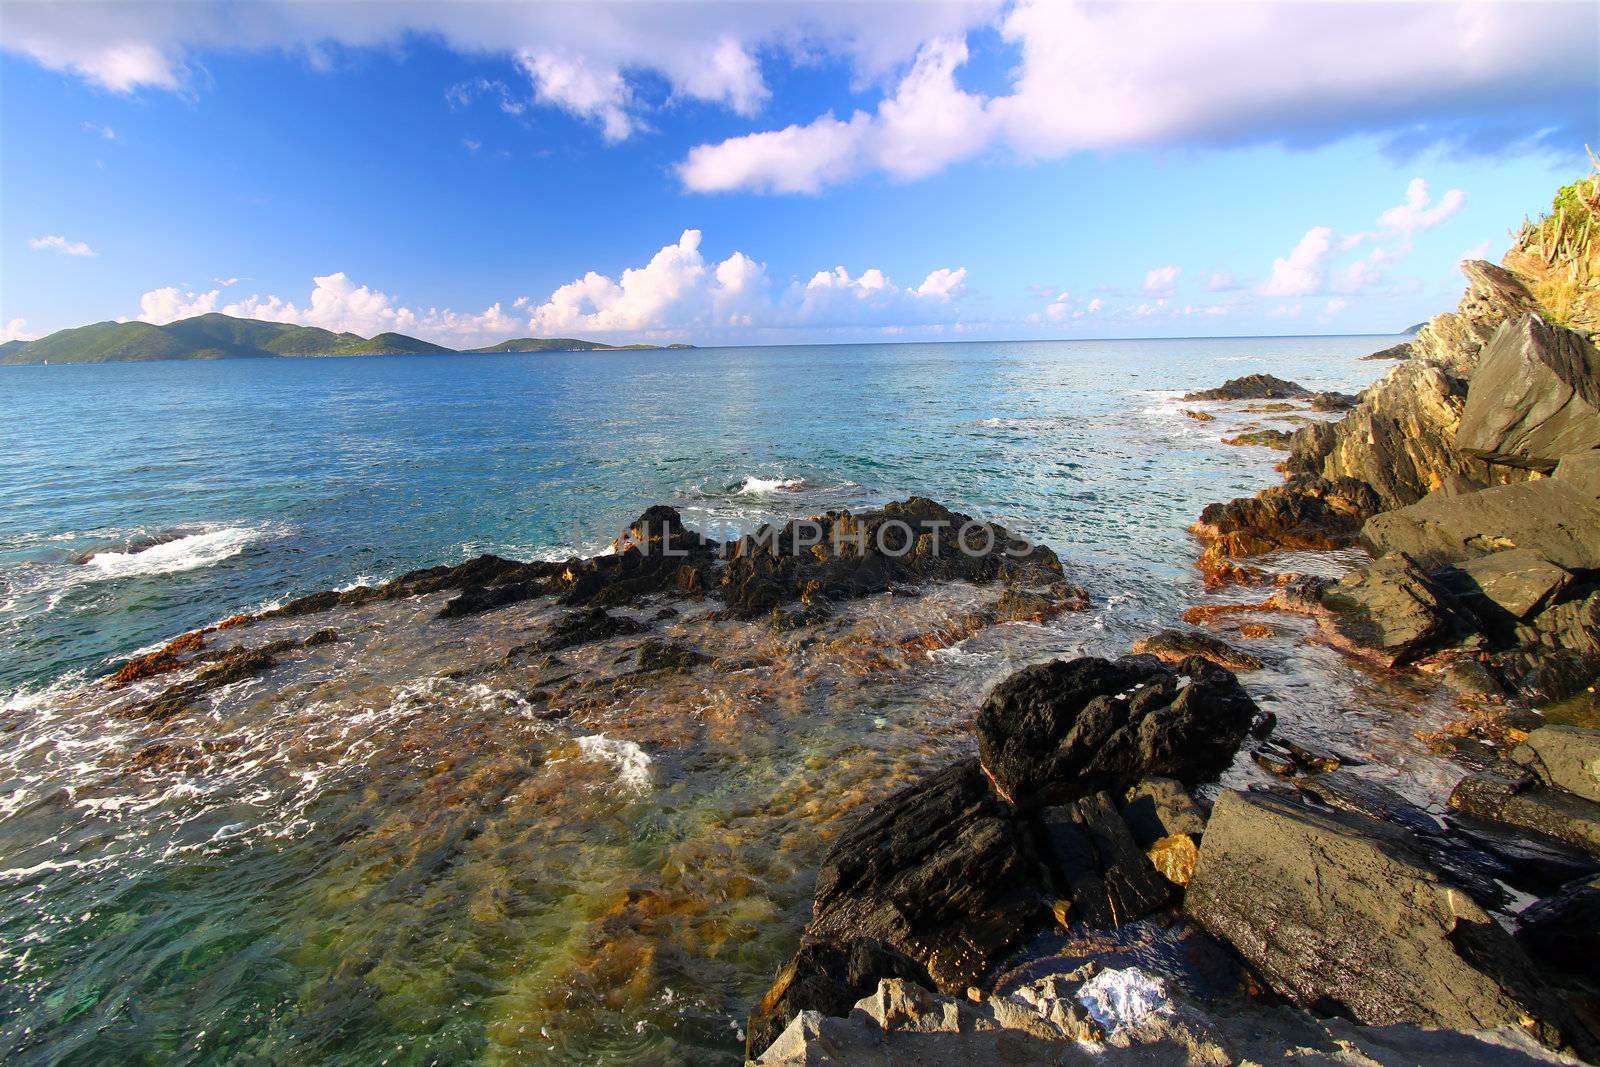 Rocky coastline near Smugglers Cove on the Caribbean island of Tortola.